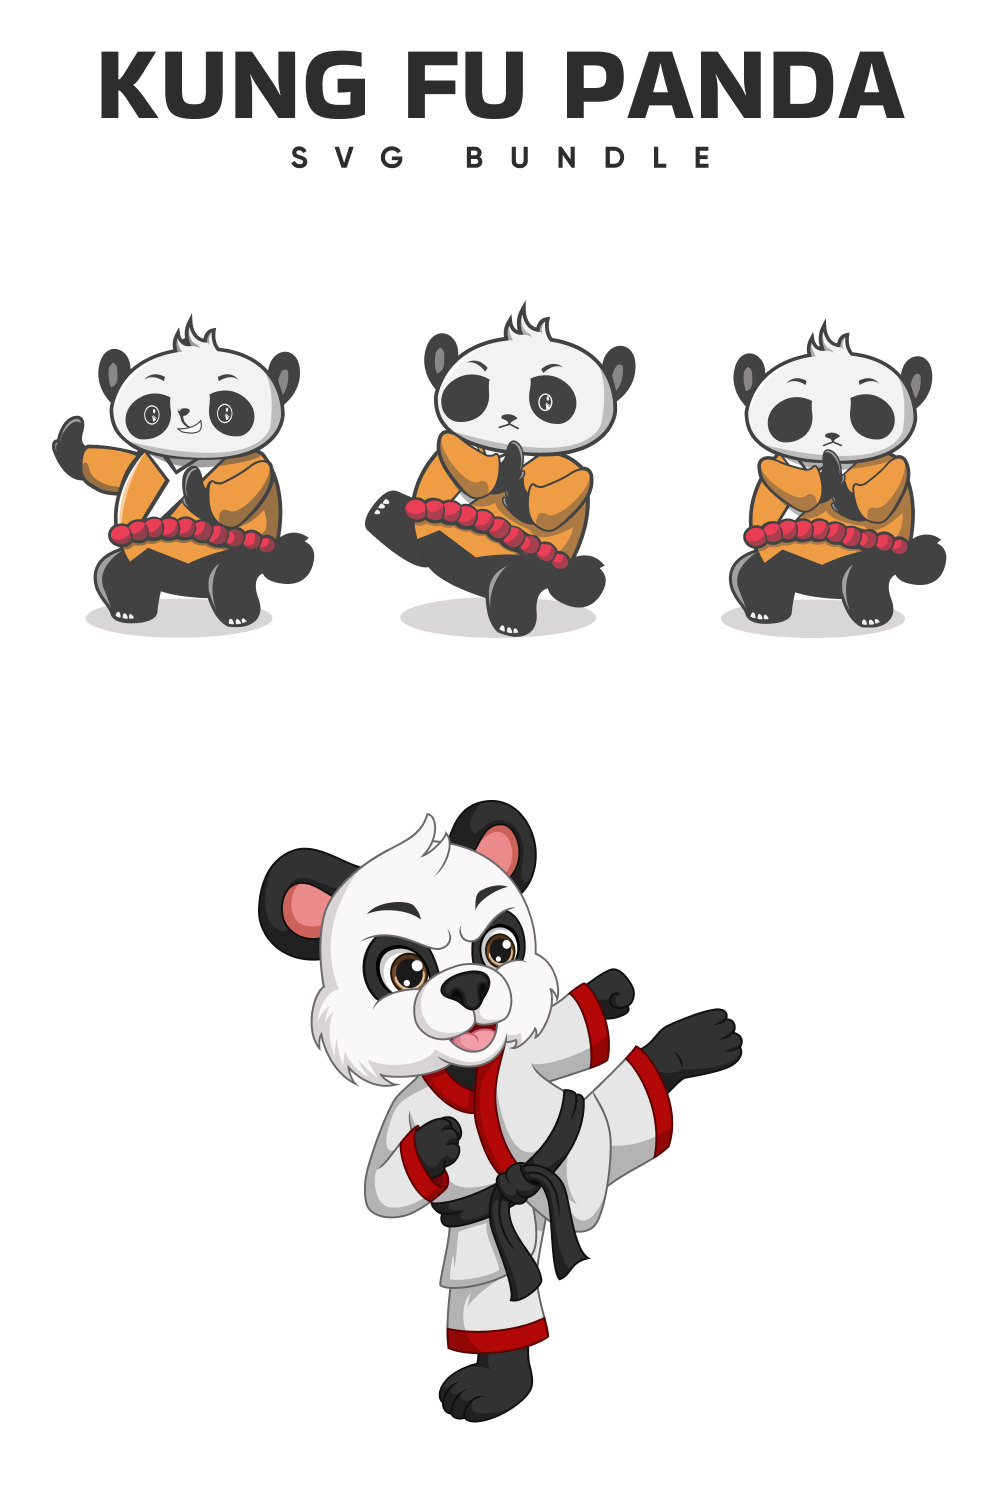 Cartoon panda is doing karate moves.